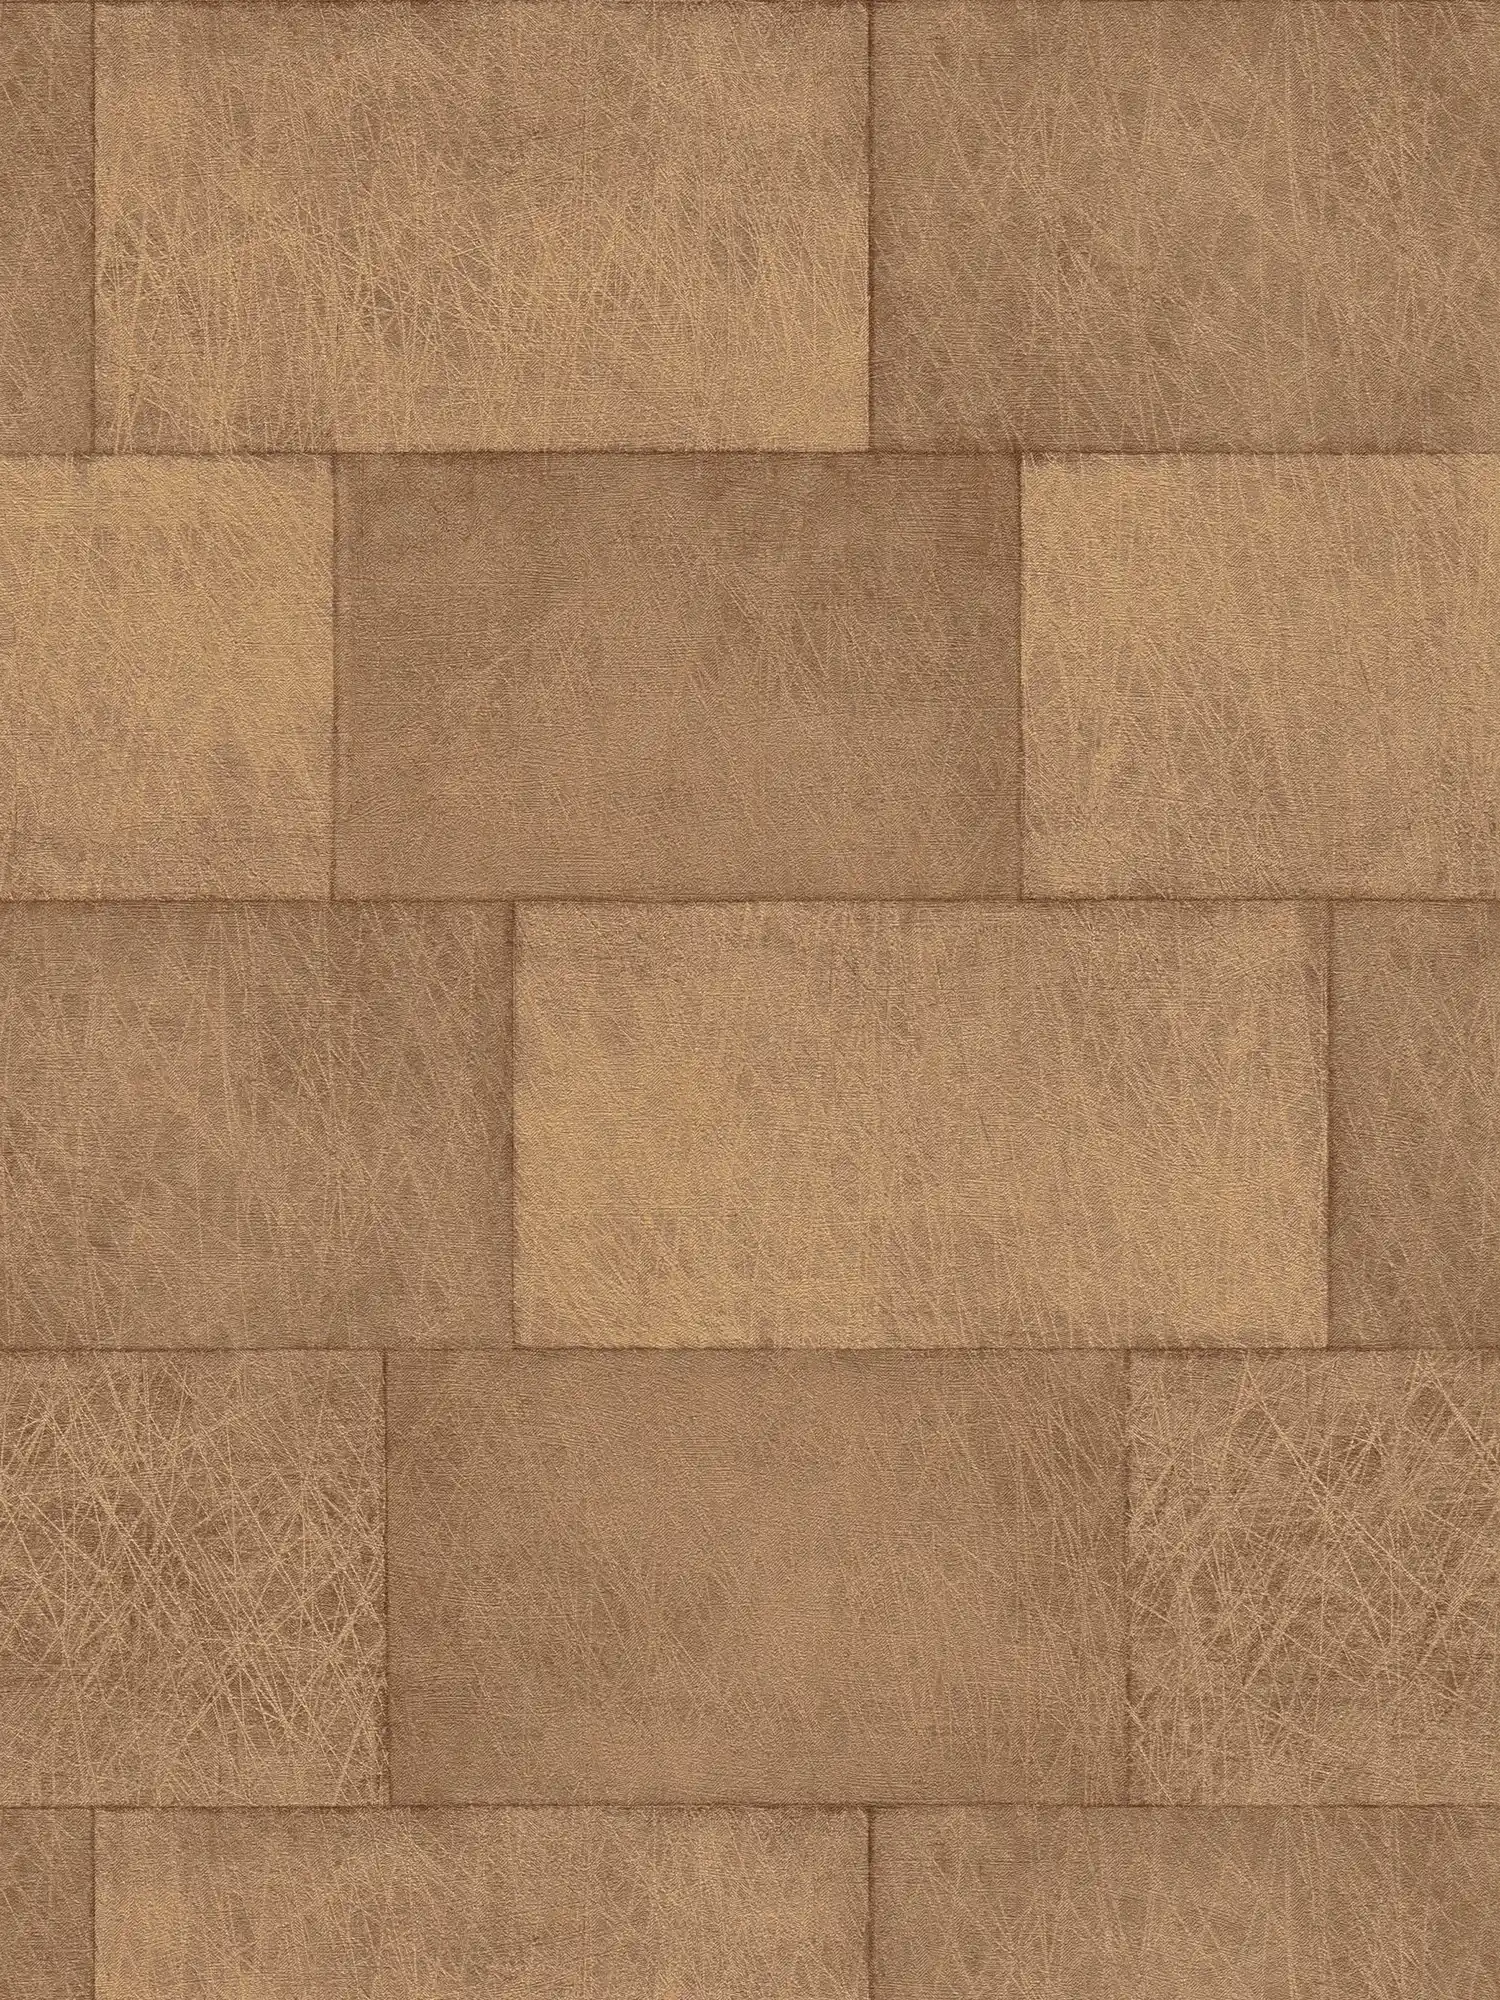 Stone optics wallpaper concrete stone pattern - brown, orange
